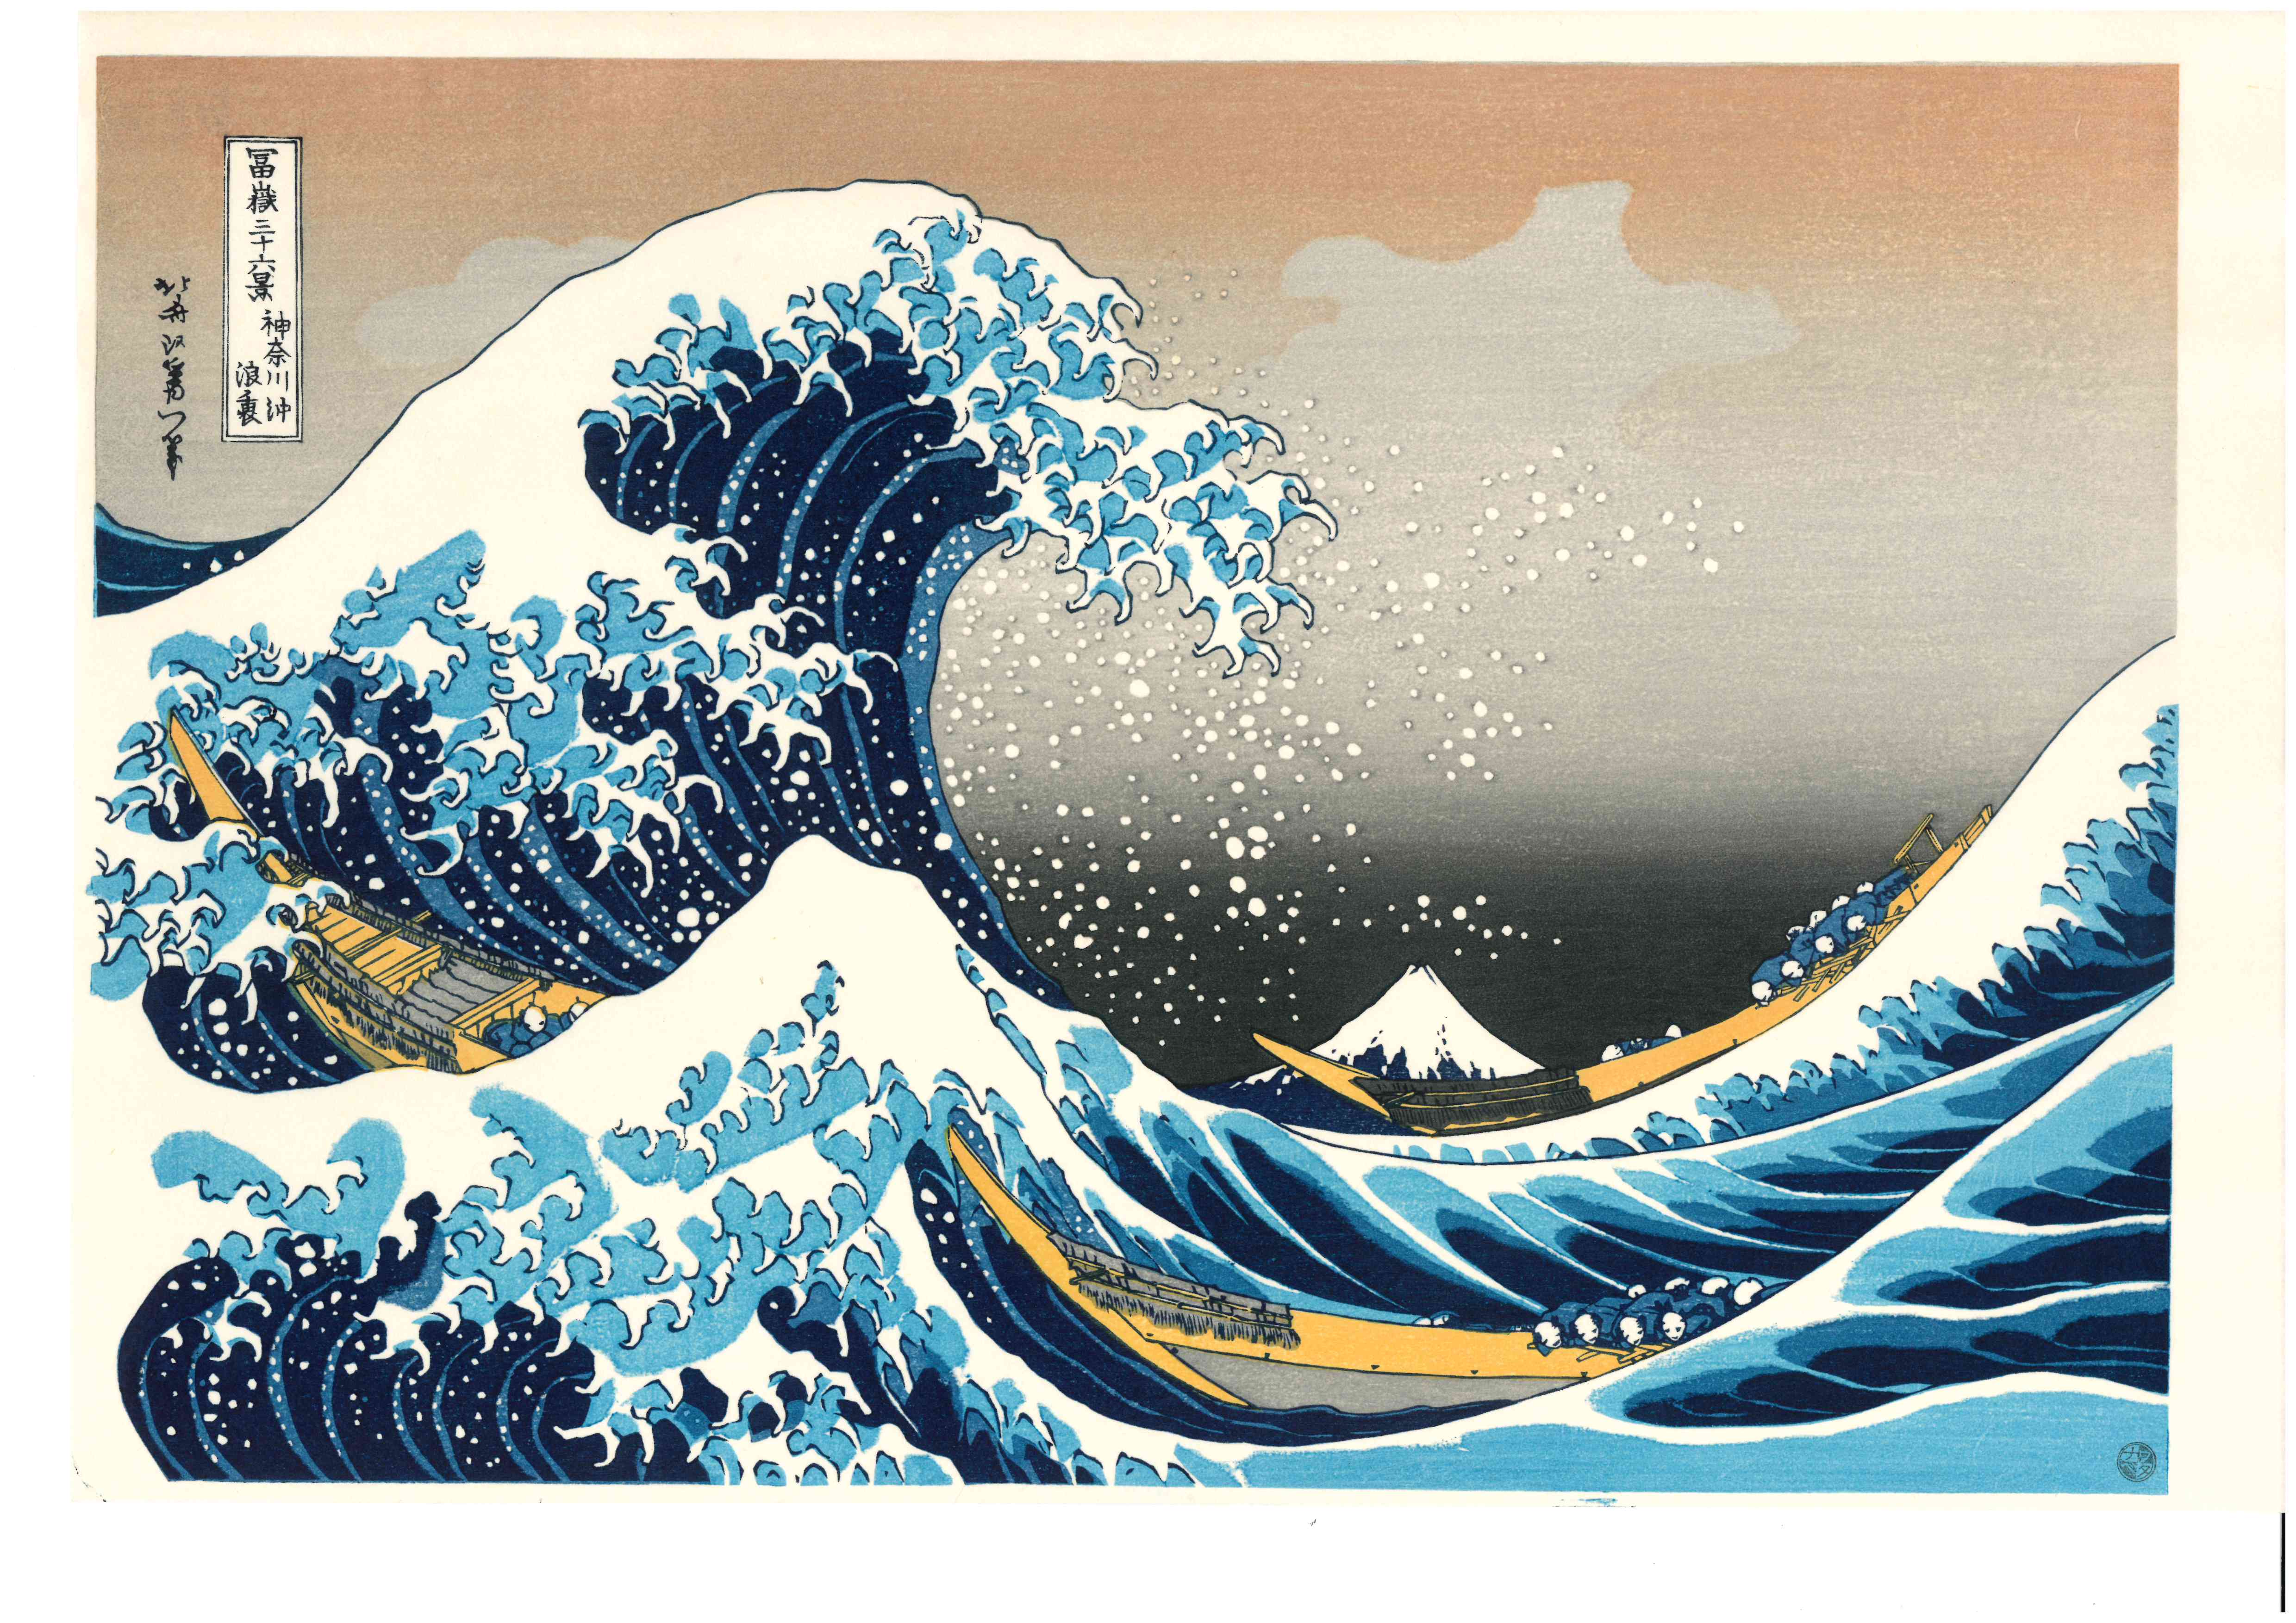 This is Katsushika Hokusai’s wooden print. 